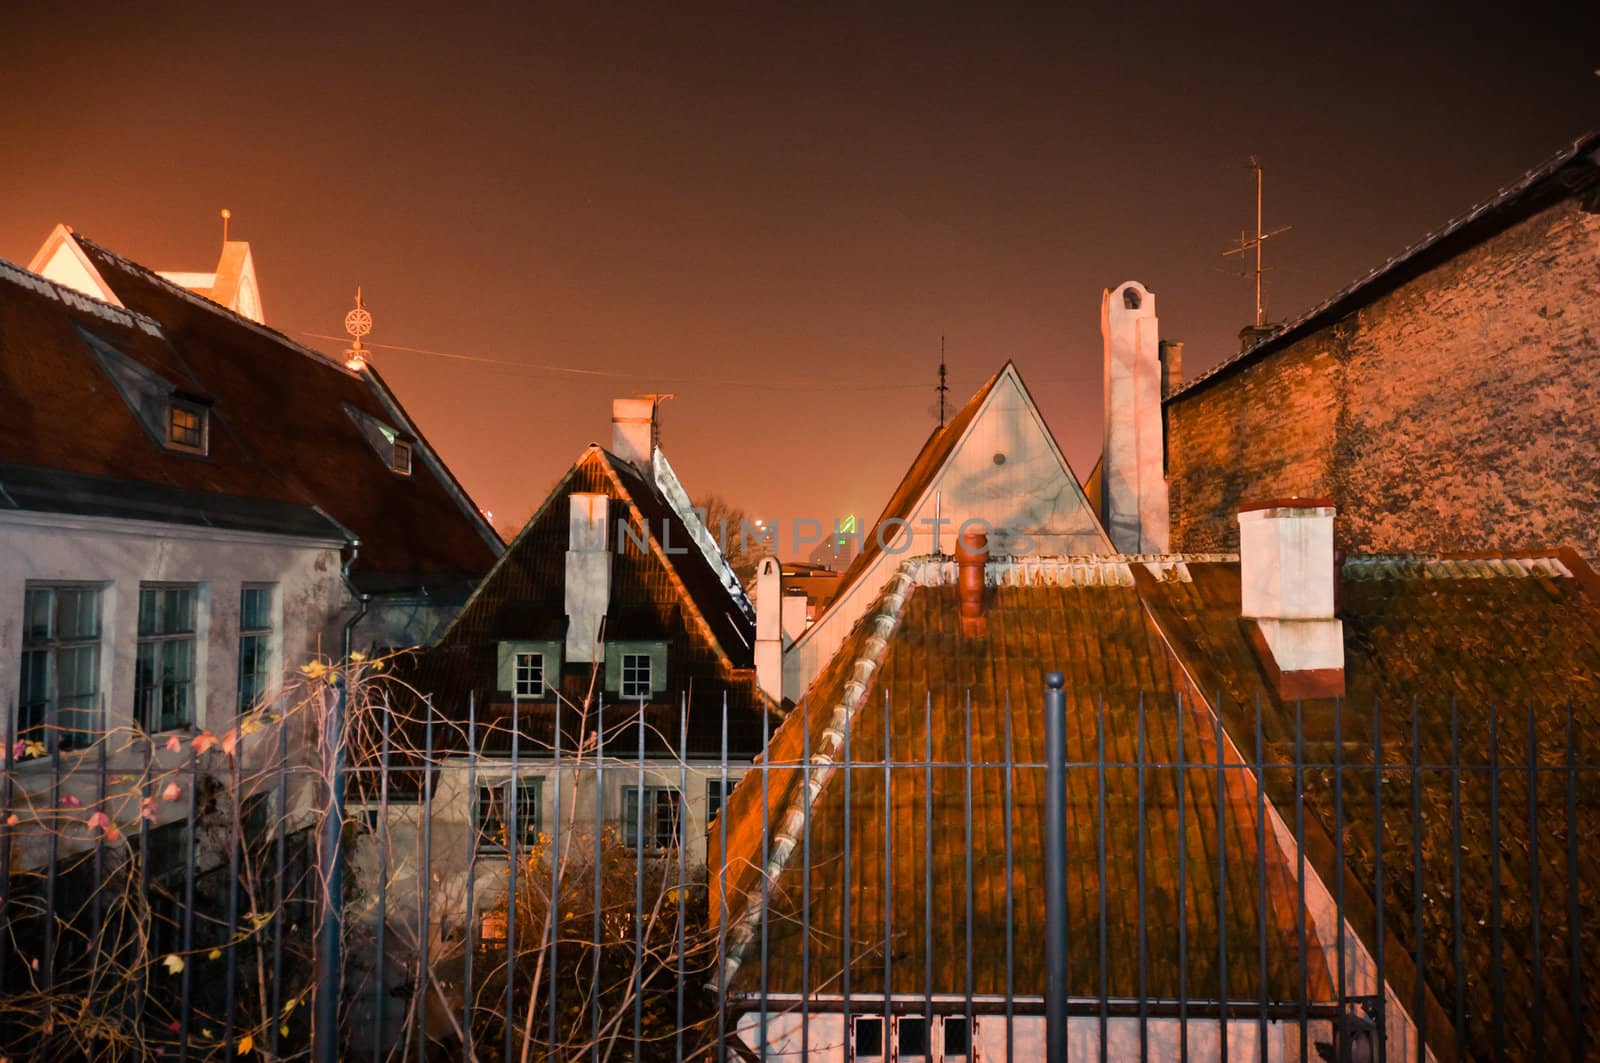 Scandinavian roofs at night by dmitryelagin